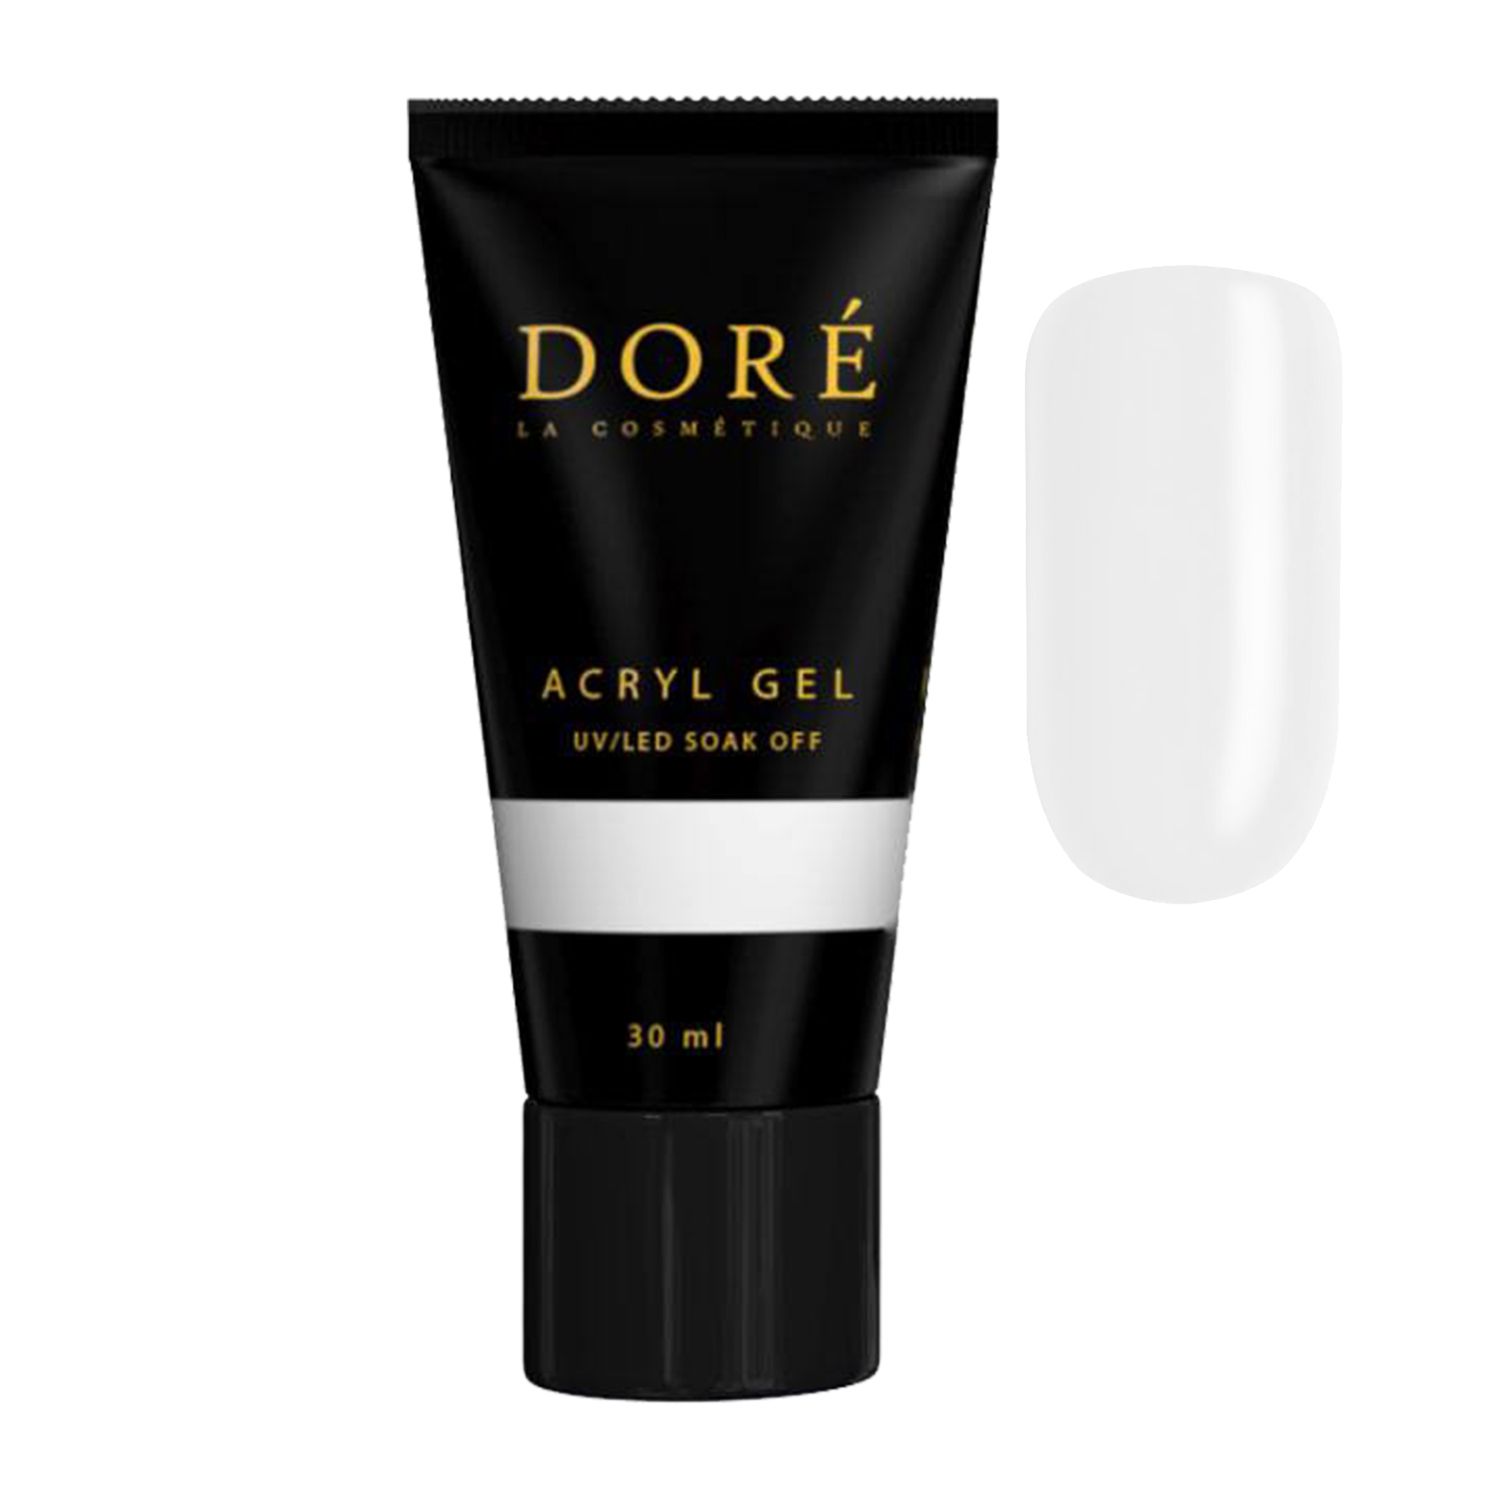 Акрил-гель - Dore La Cosmetique - офіційний сайт бренду гель-лаків